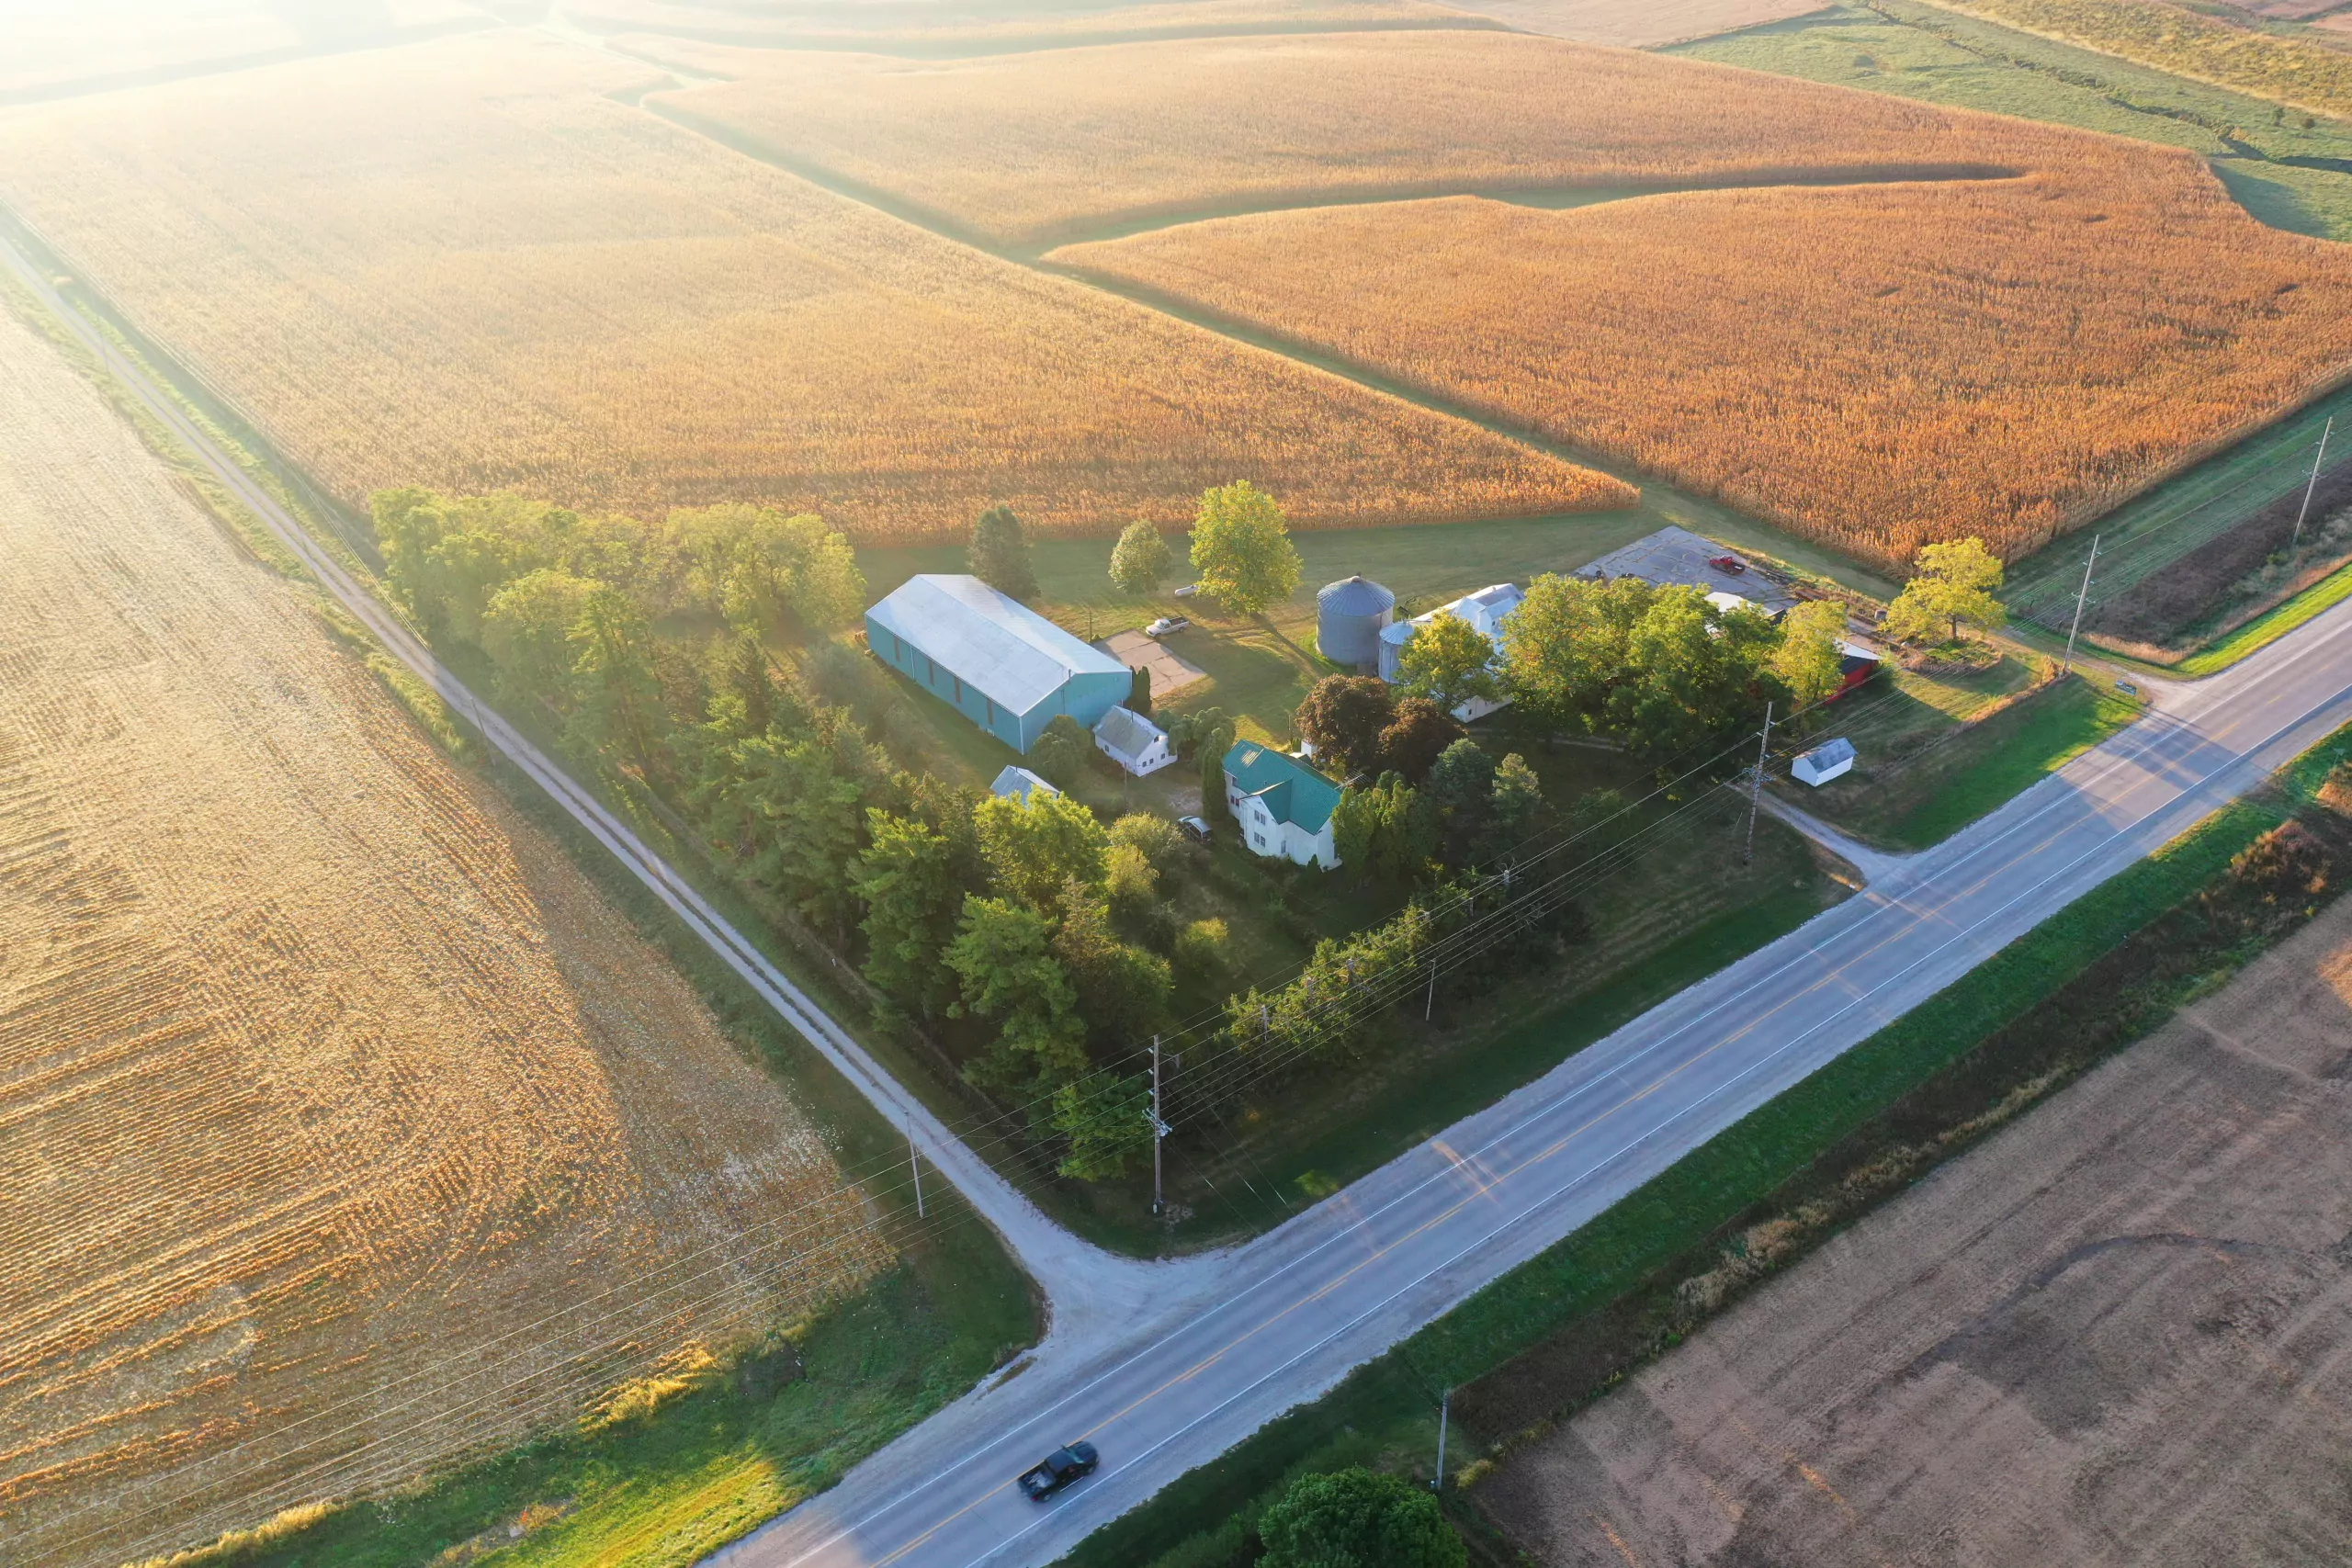 Washington County, Iowa Land Auction